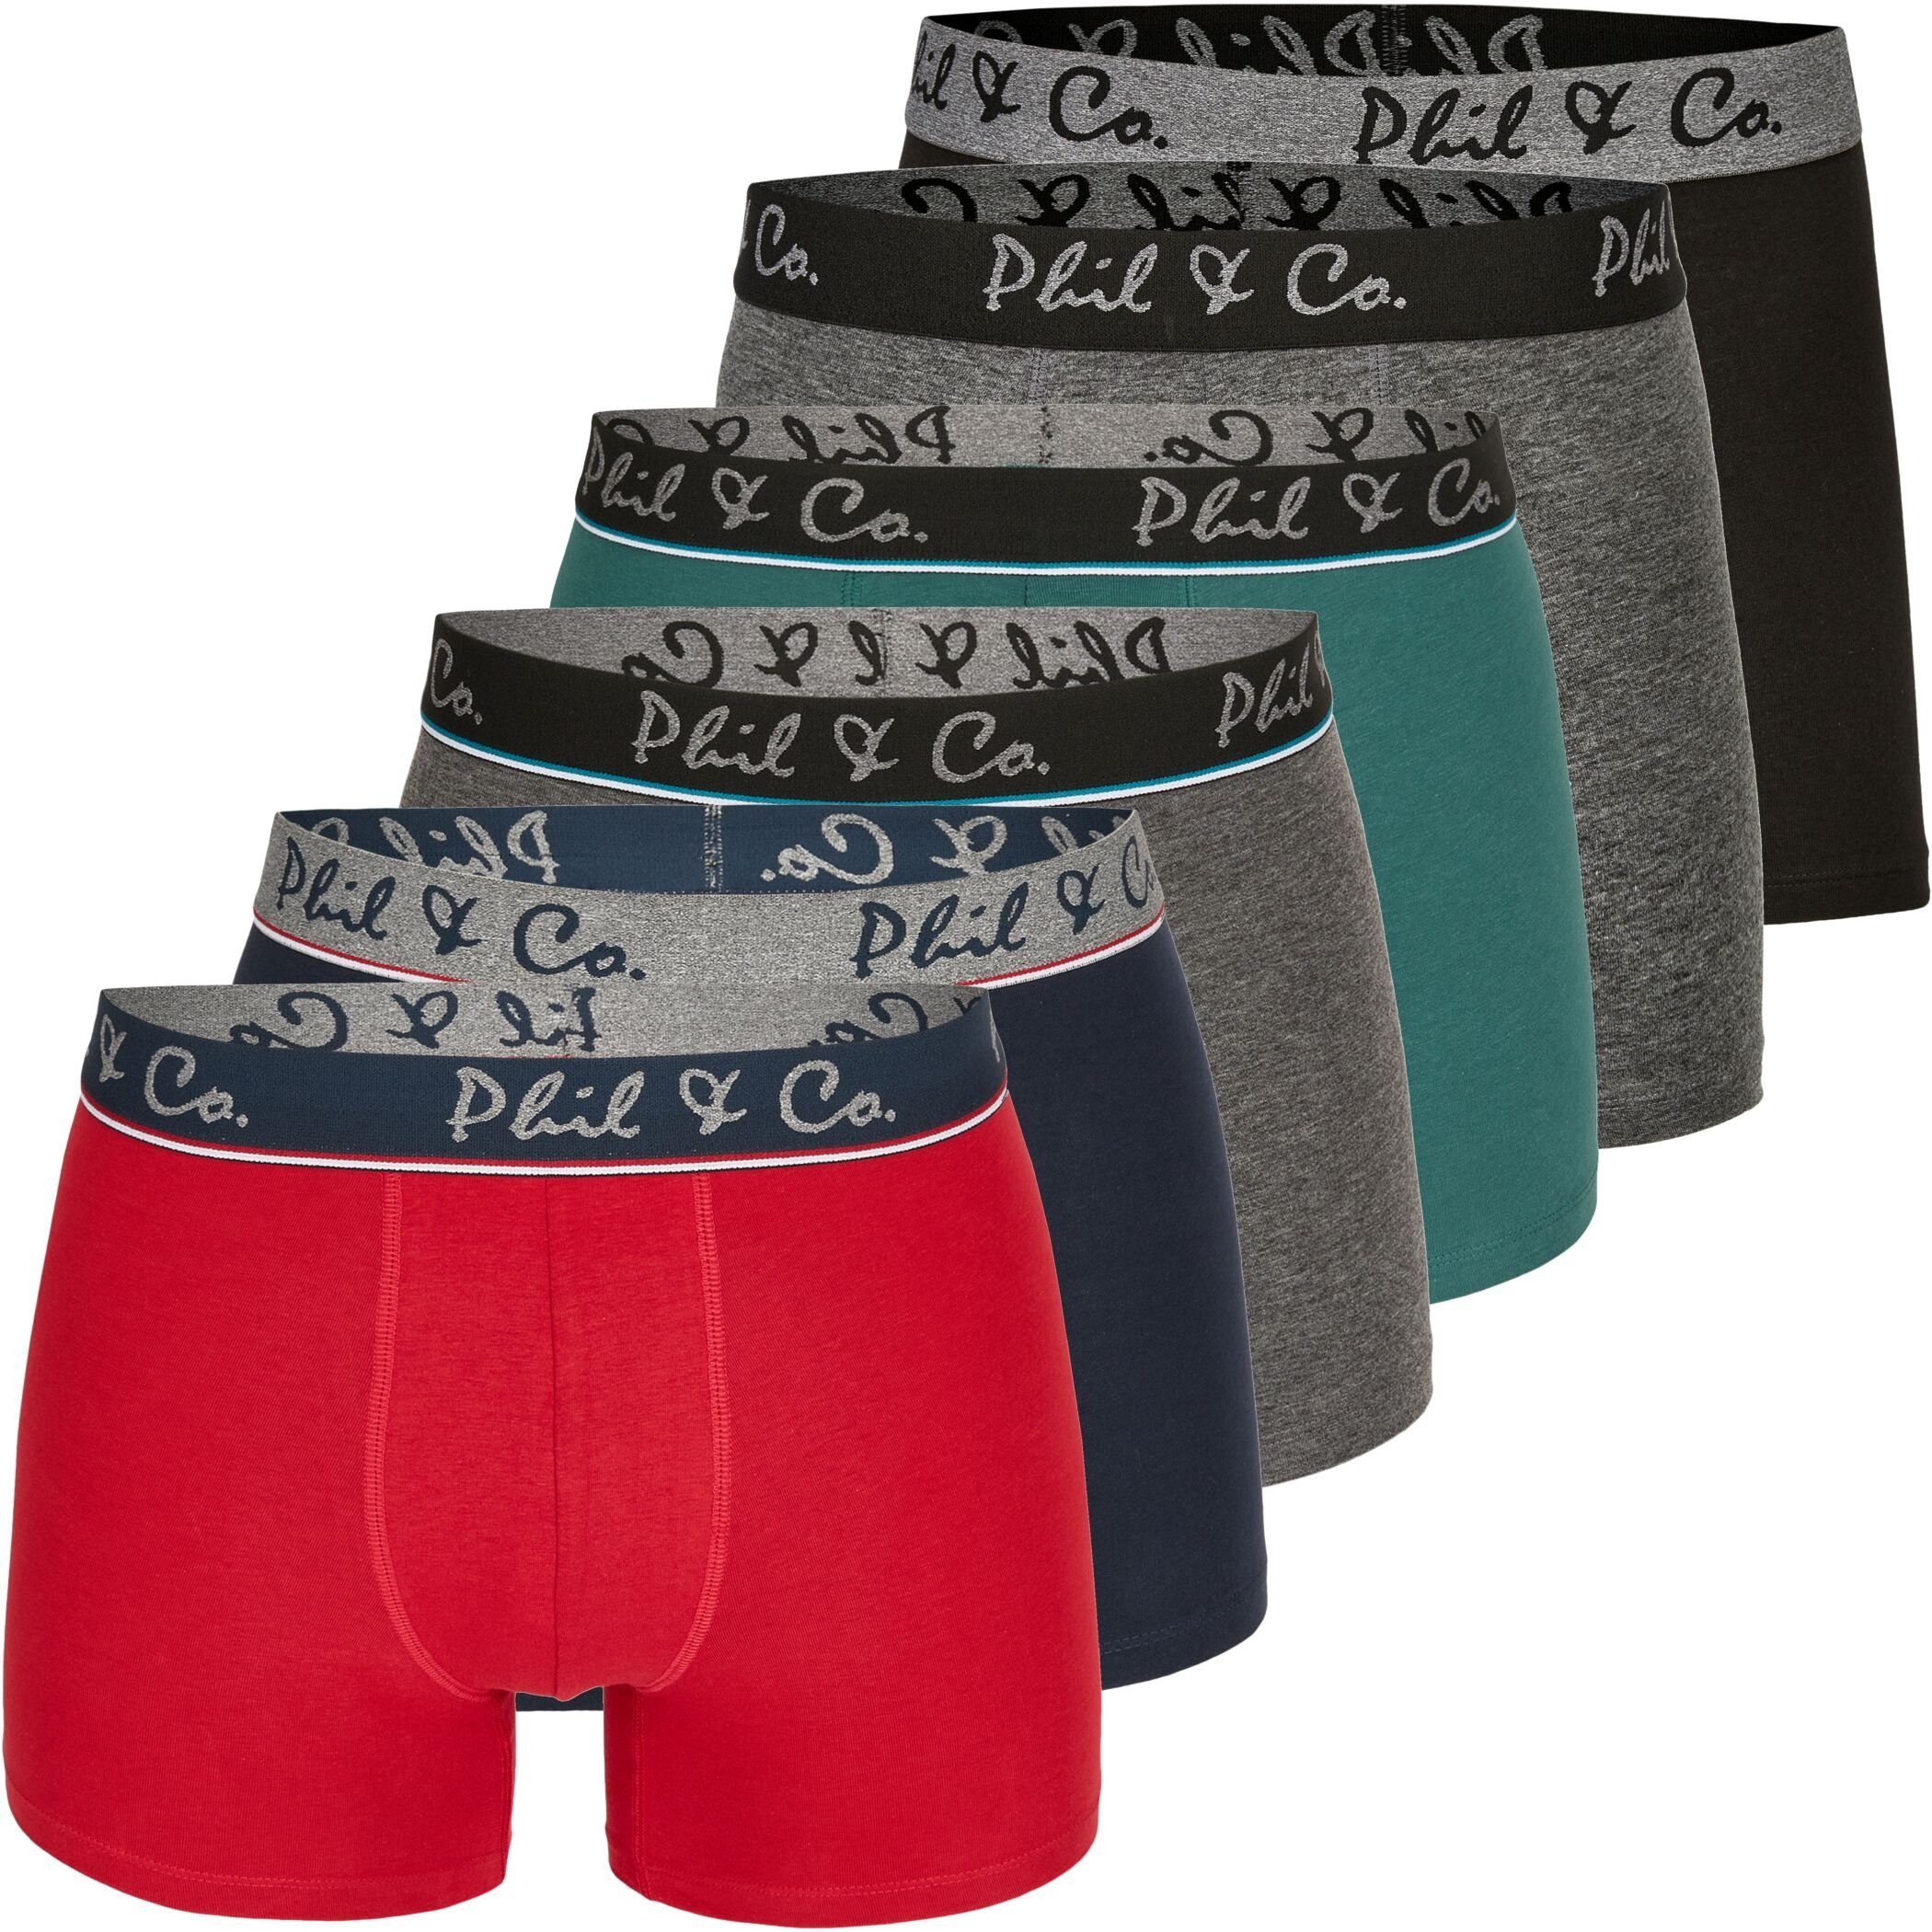 Phil & Co. Boxershorts Berlin Phil 24 6er Pant Short Jersey Co (1-St) Boxershorts FARBWAHL Trunk Pack & DESIGN